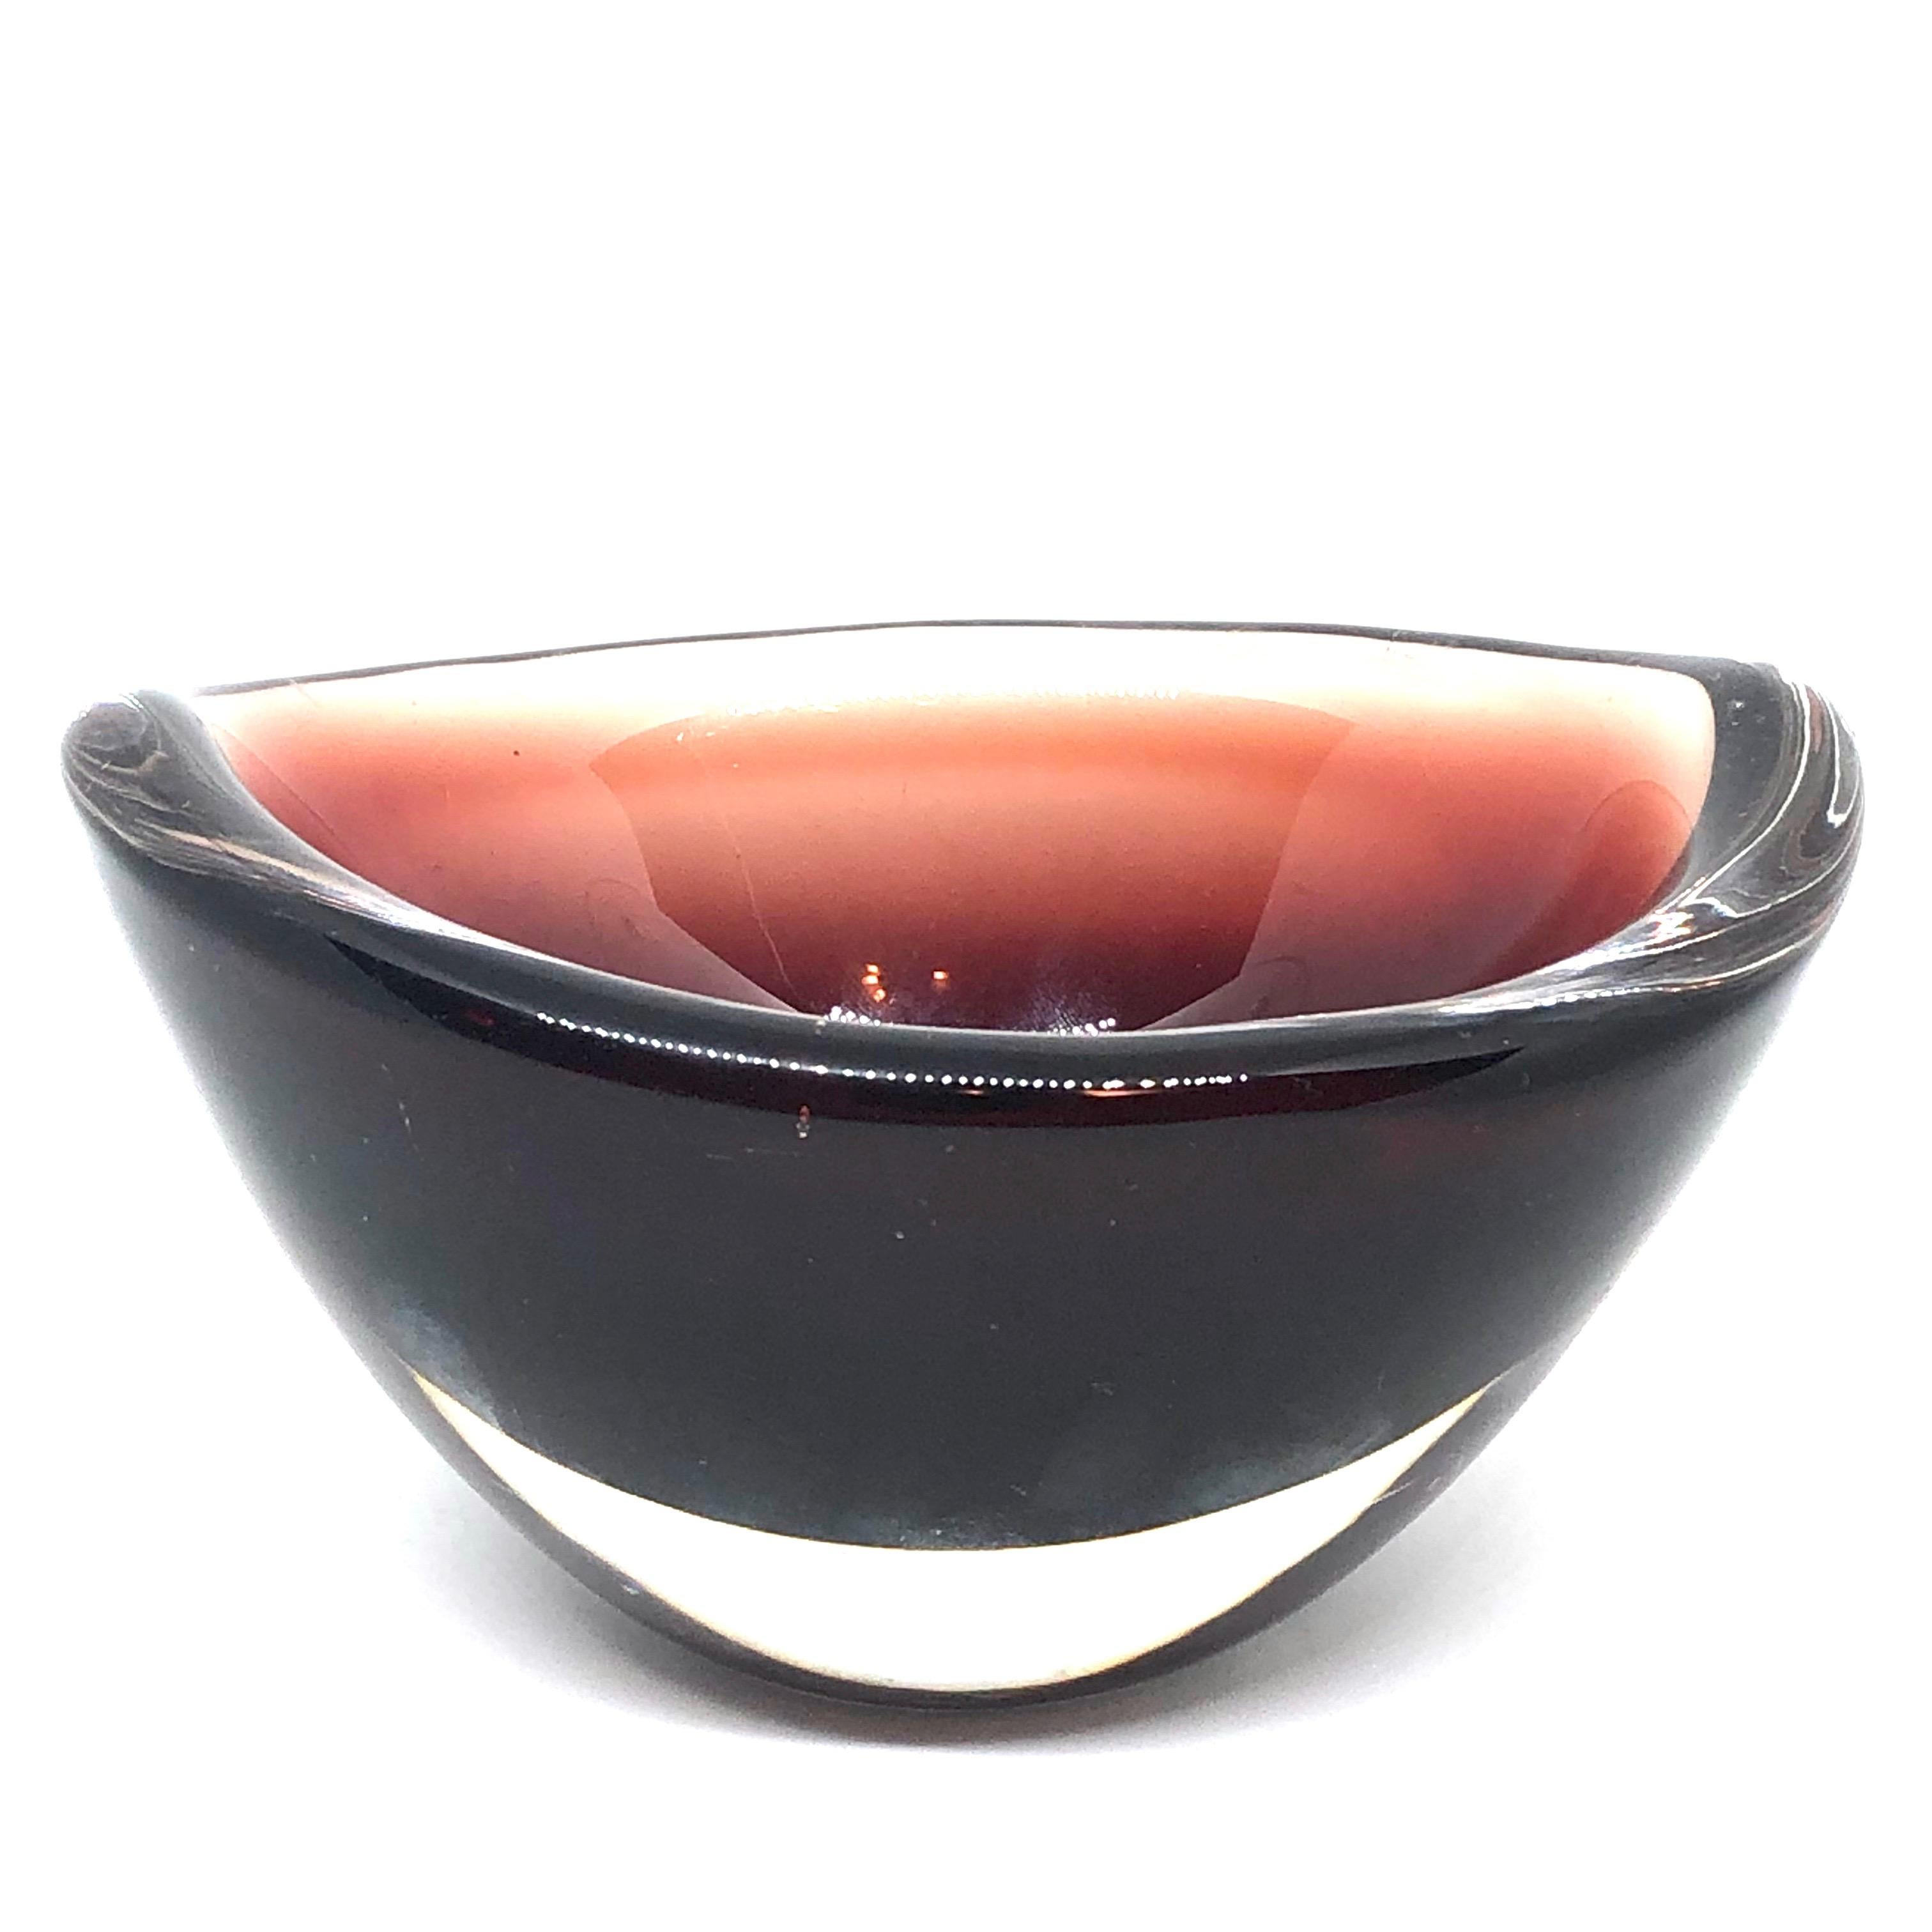 Rare circa 1950s unusually shaped canoe studio bowl, modernist design by world famous 